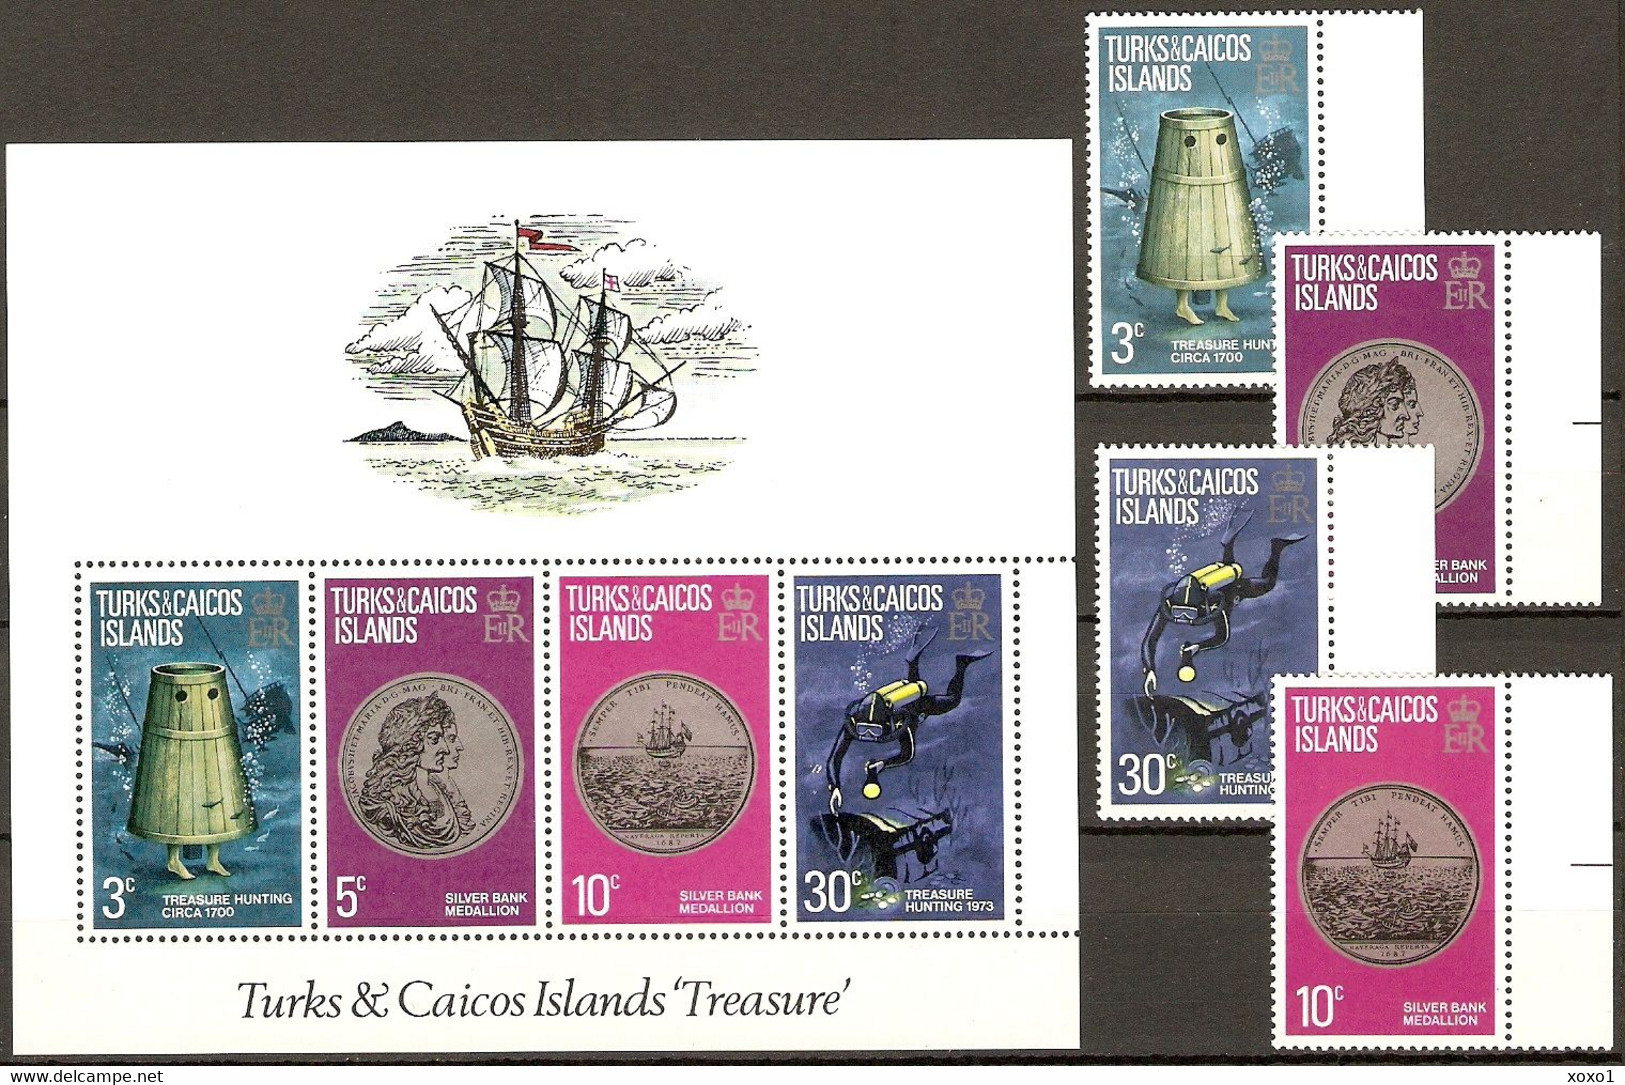 Turks & Caicos 1973 MiNr. 301 - 304 (Block 1) Sea Treasure Hunt Diving Coins 4v + S\sh MNH ** 4,70 € - Tauchen